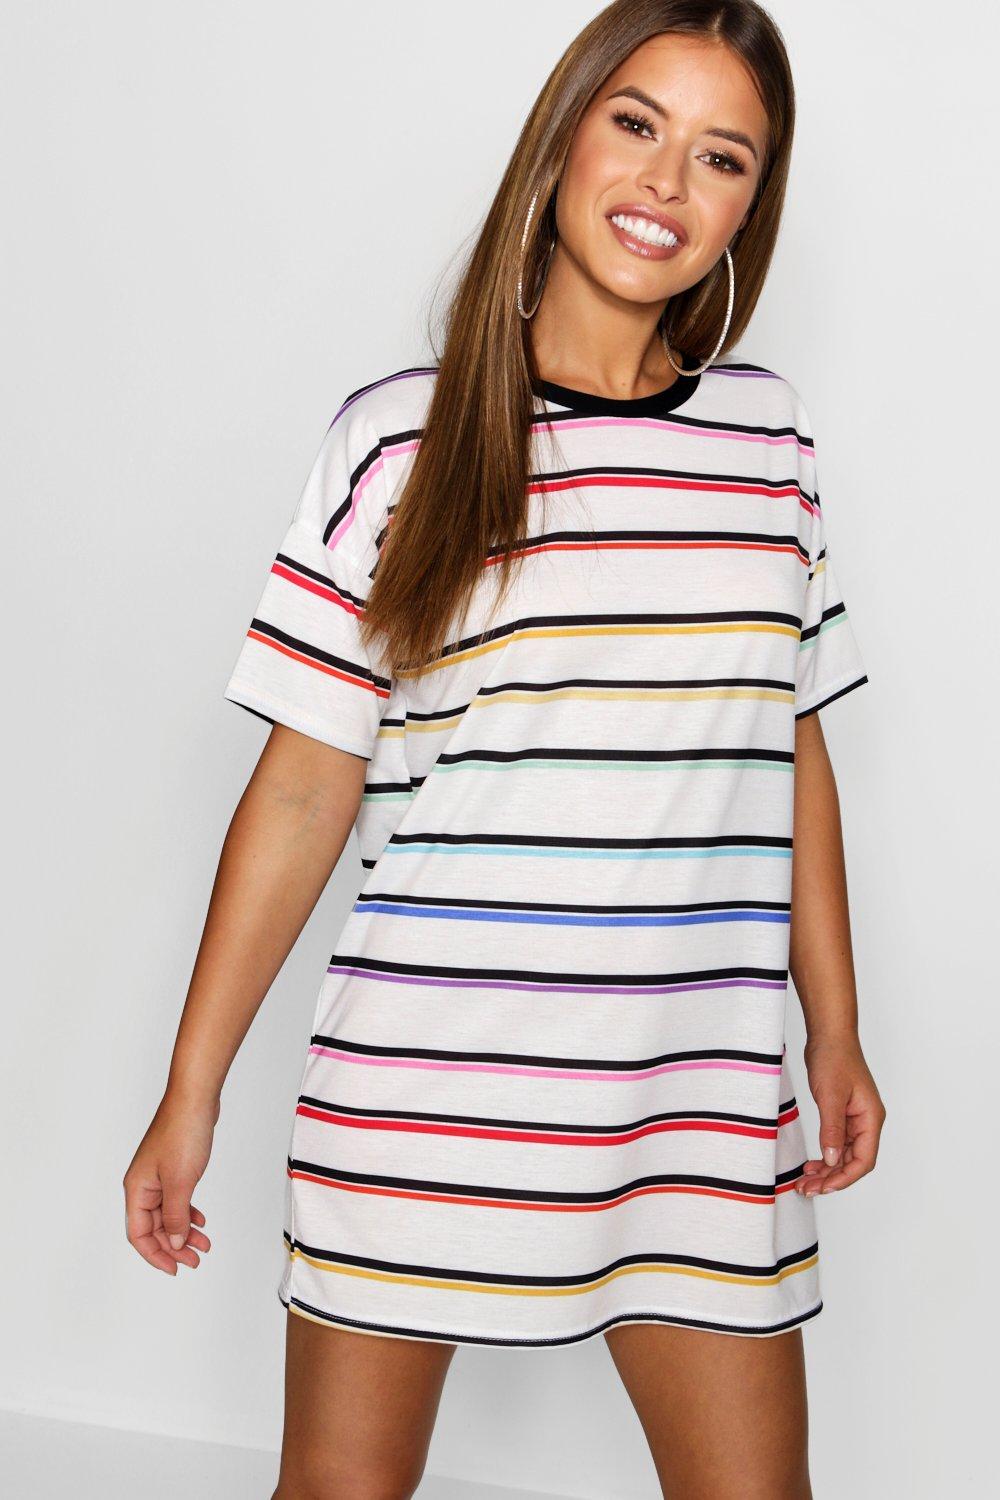 t shirt dress rainbow